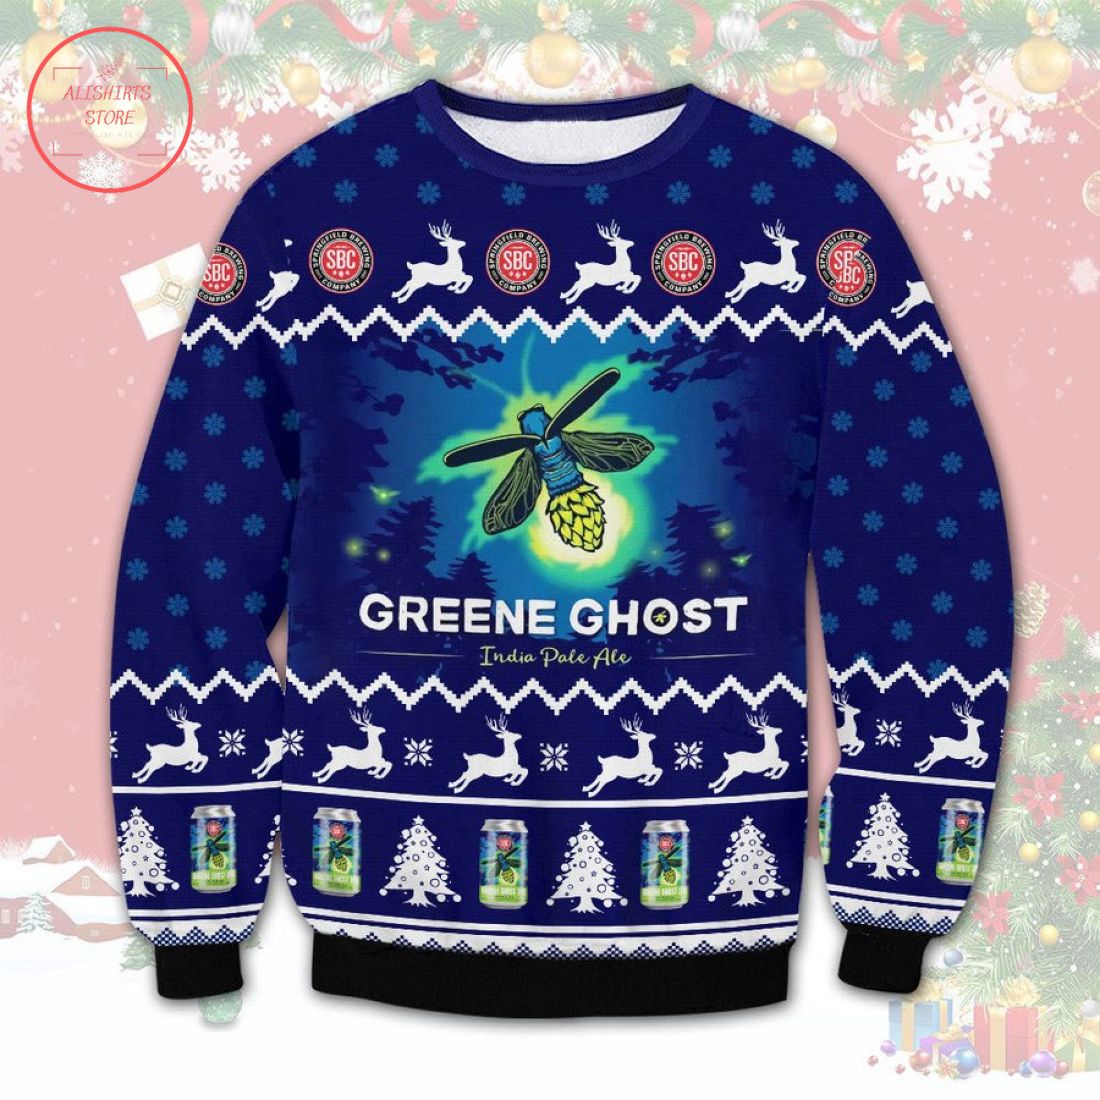 Springfield Greene Ghost IPA Ugly Christmas Sweater